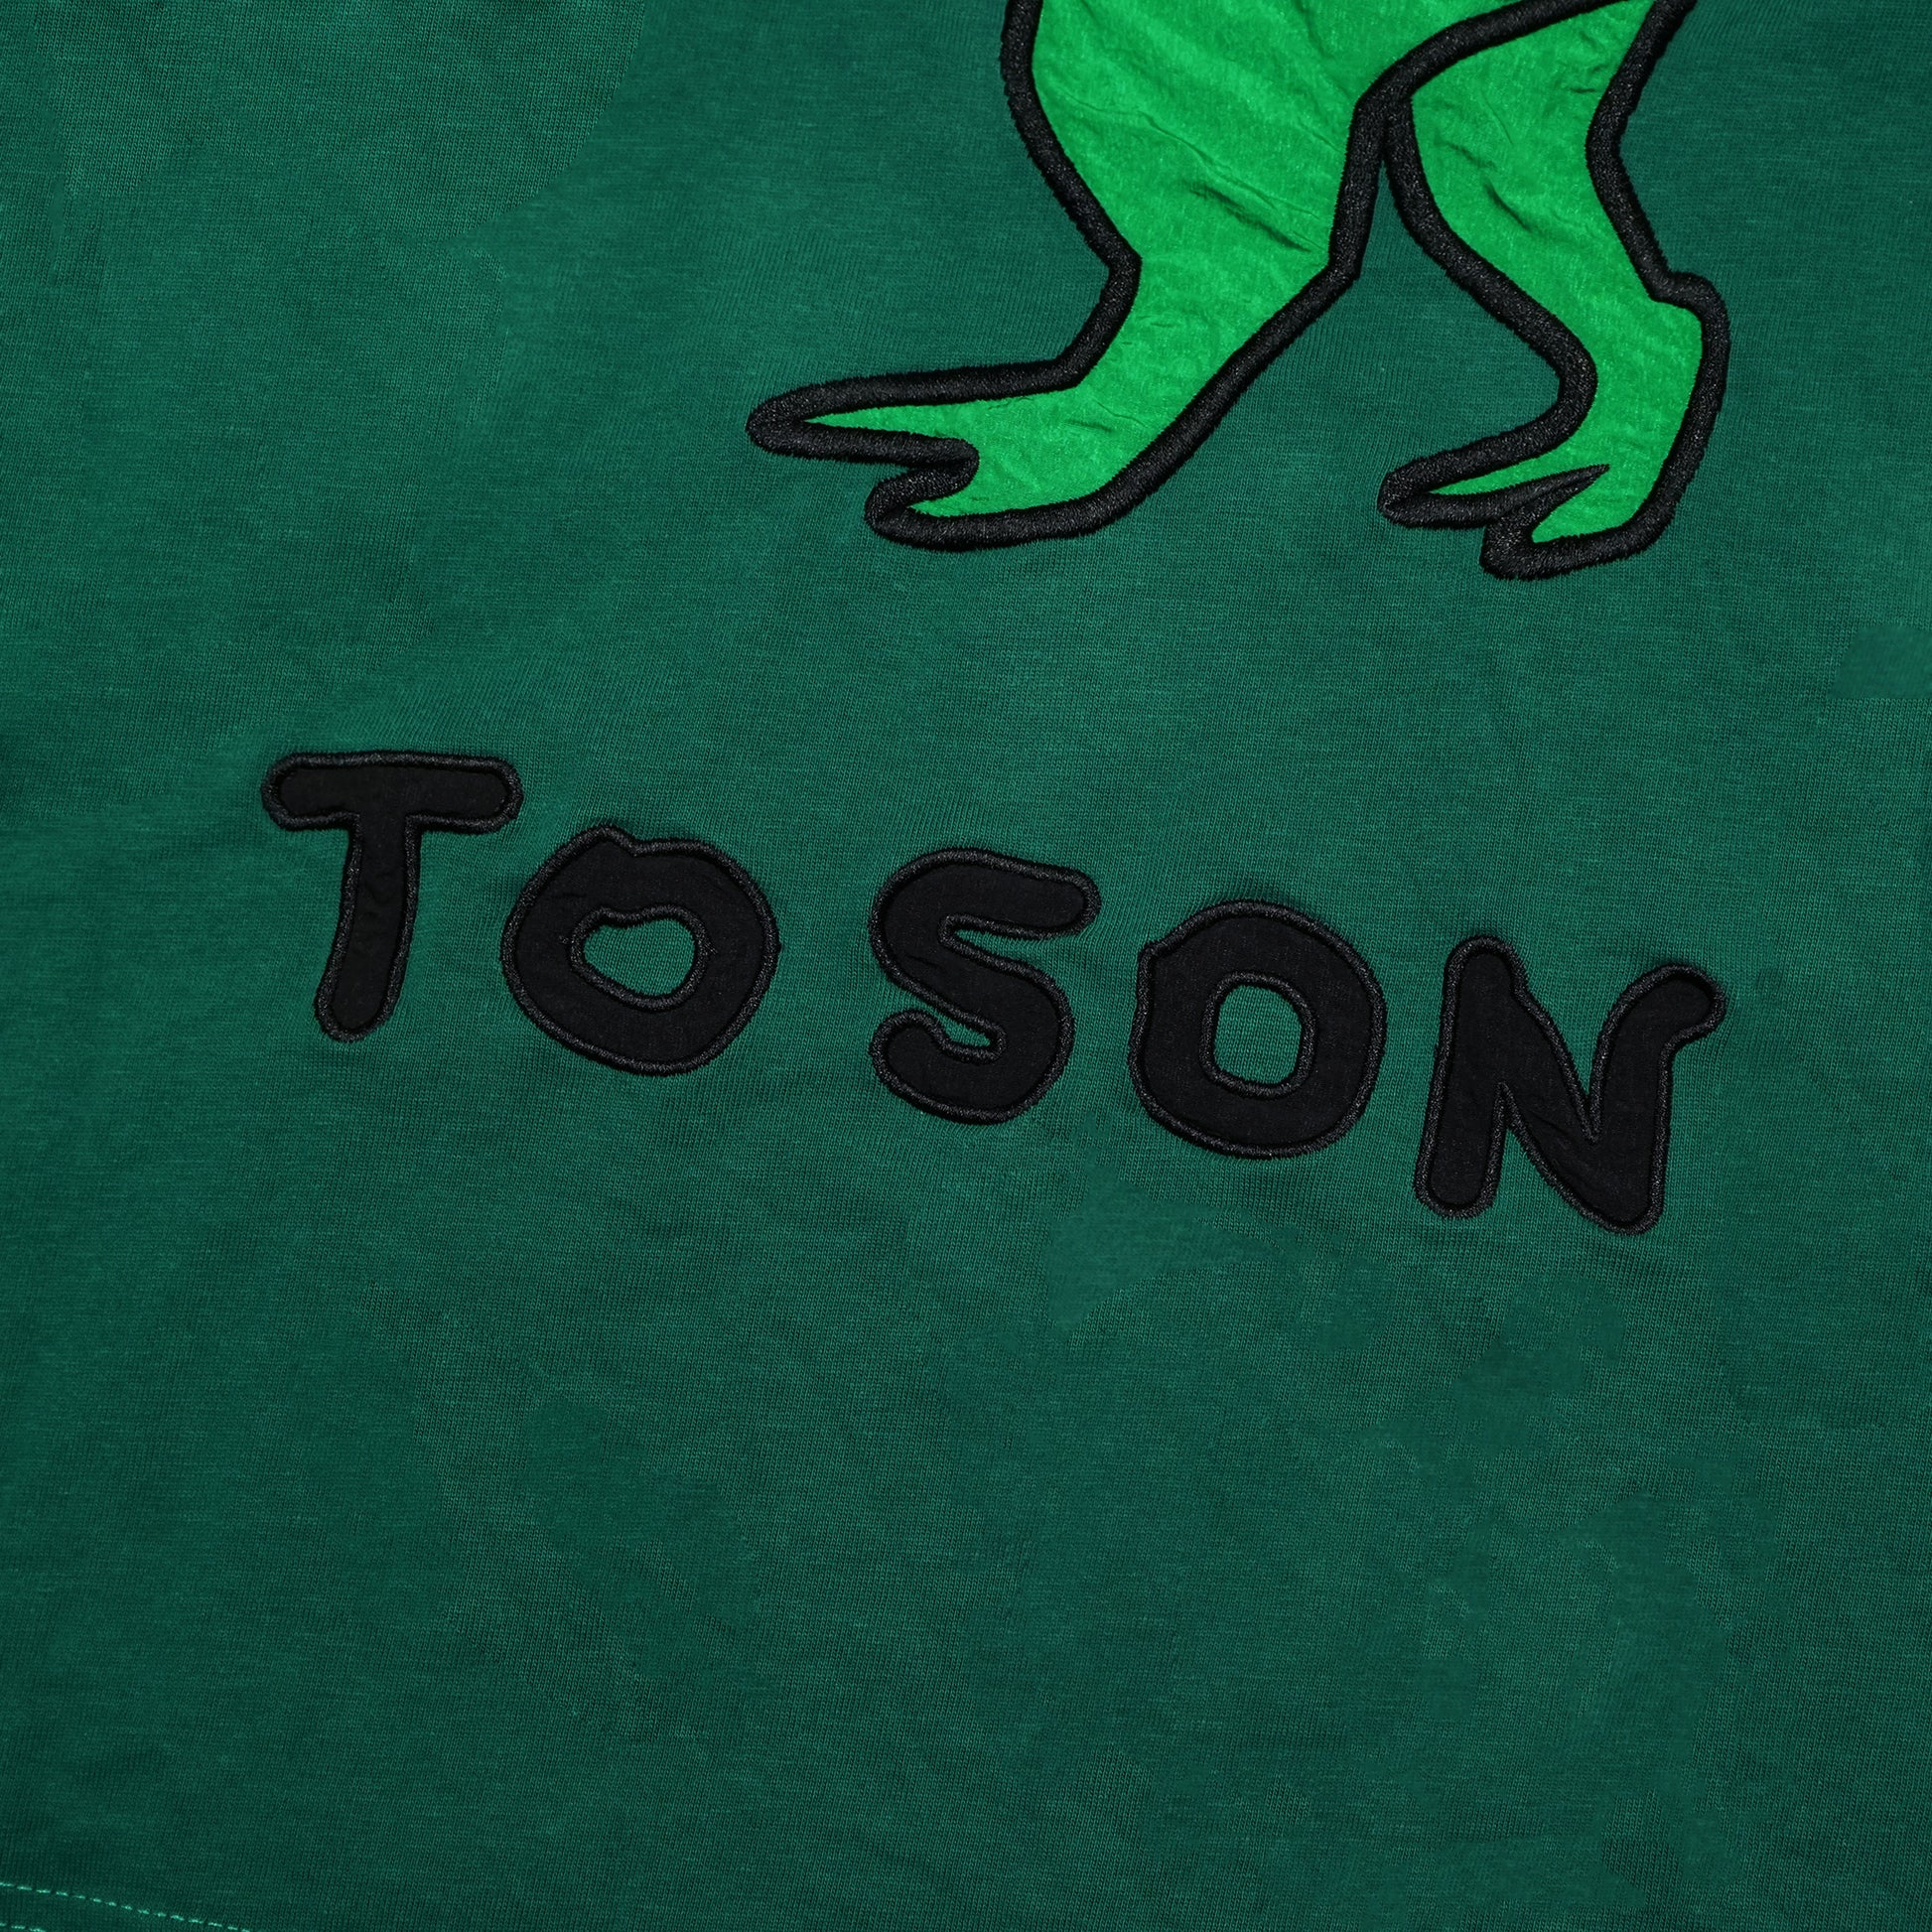 Toson, "Dinosaur" Patchwork Long Sleeve T-shirt - Green